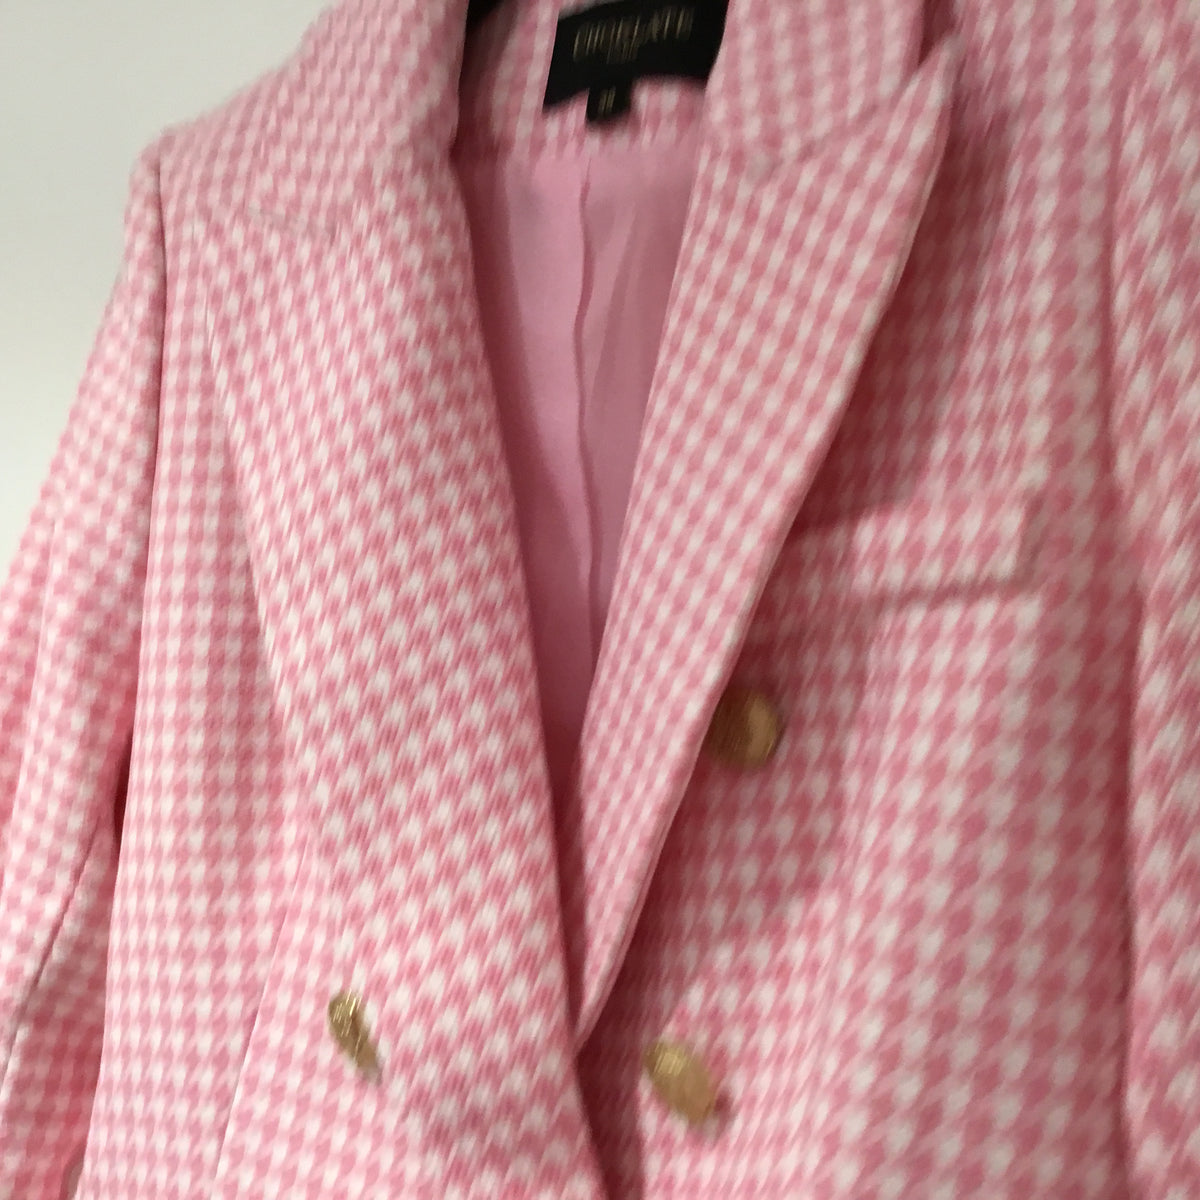 Choklate Paris dogtooth blazer Pink/White Size 38